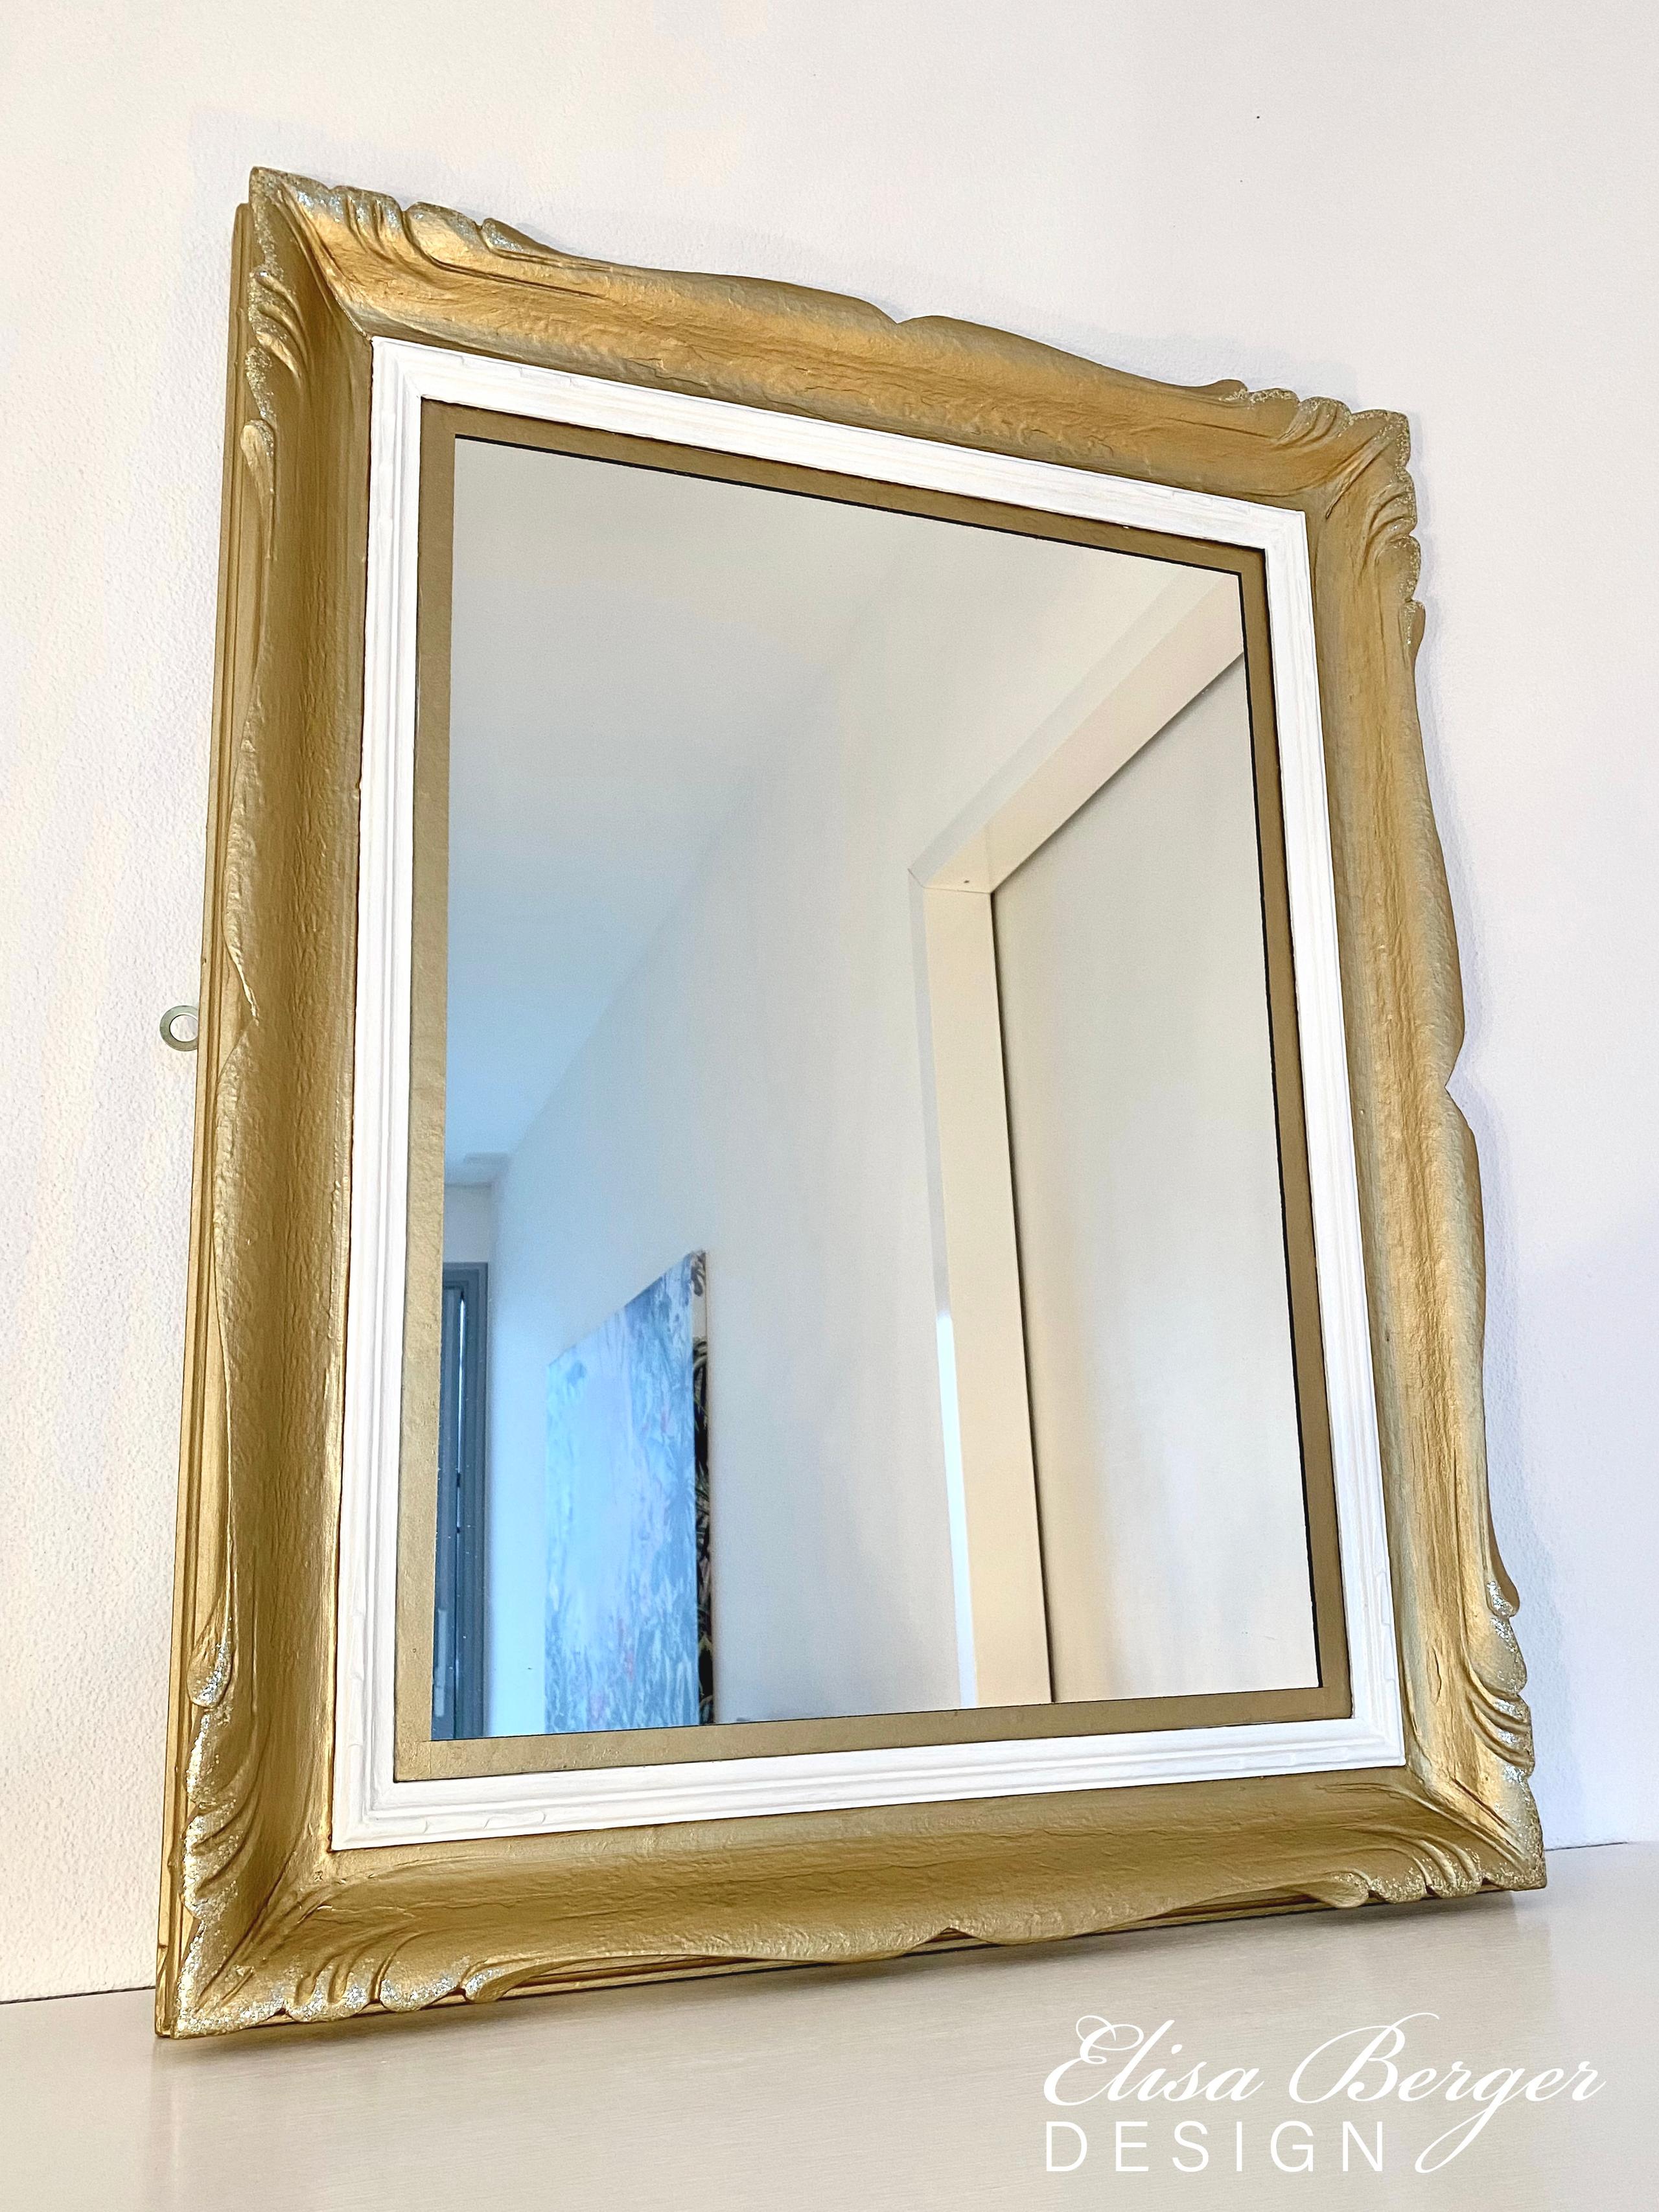 Gold & White Antic Wall Mirror, Elisa Berger Design Studio Lugano,Zurich,Como,Ascona,Furniture,Home Decor,Online Shop,Cozy Eco Chic Style,Lighting